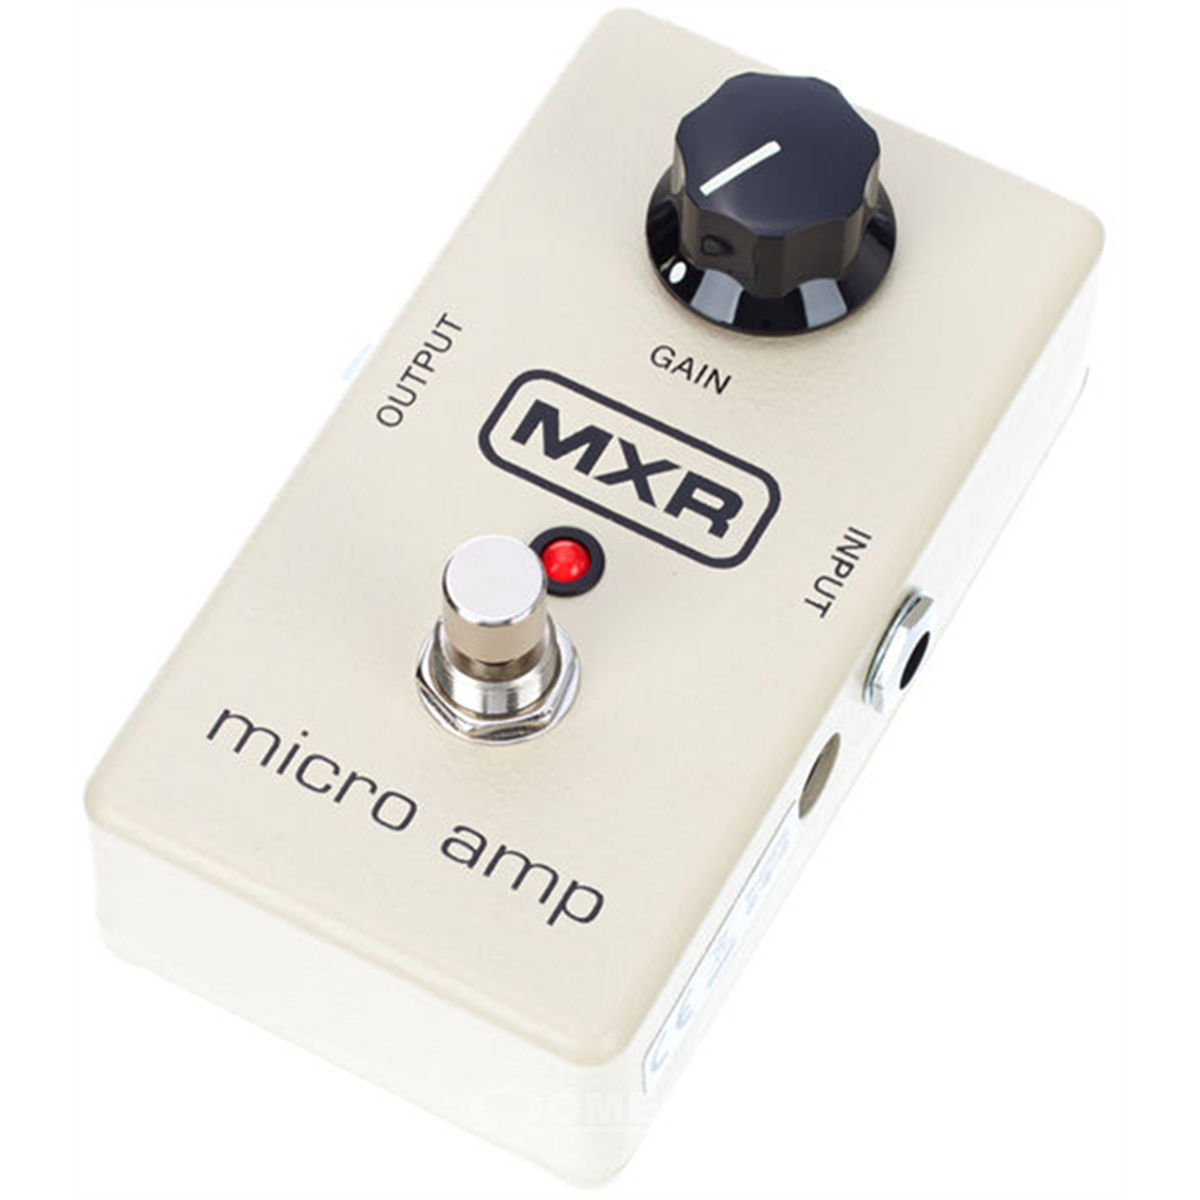  Micro Amp